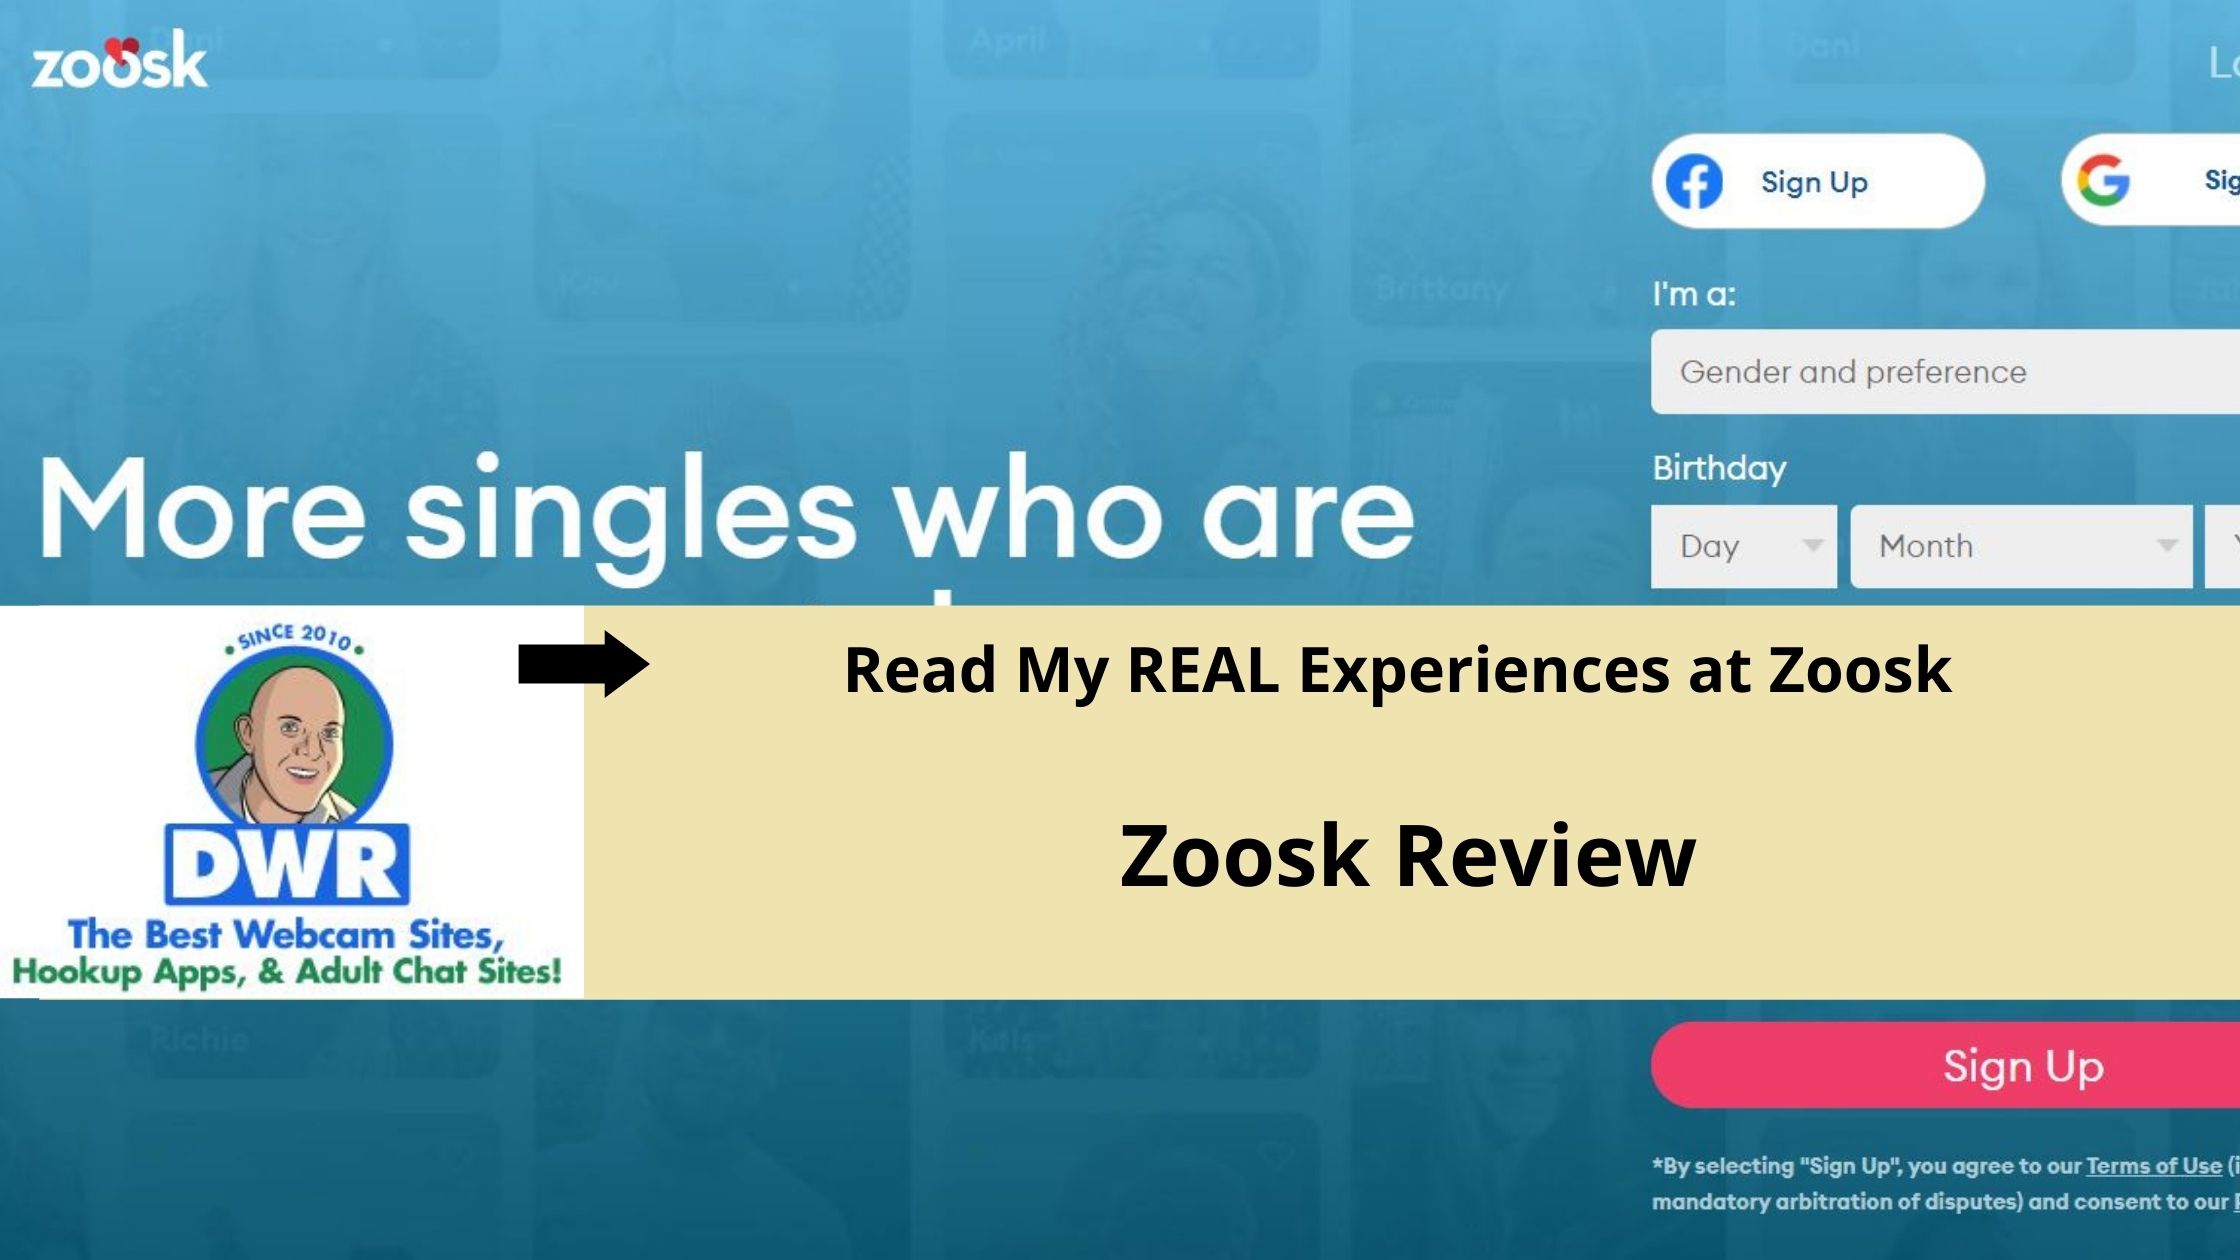 Zoosk Review Is It Legit?